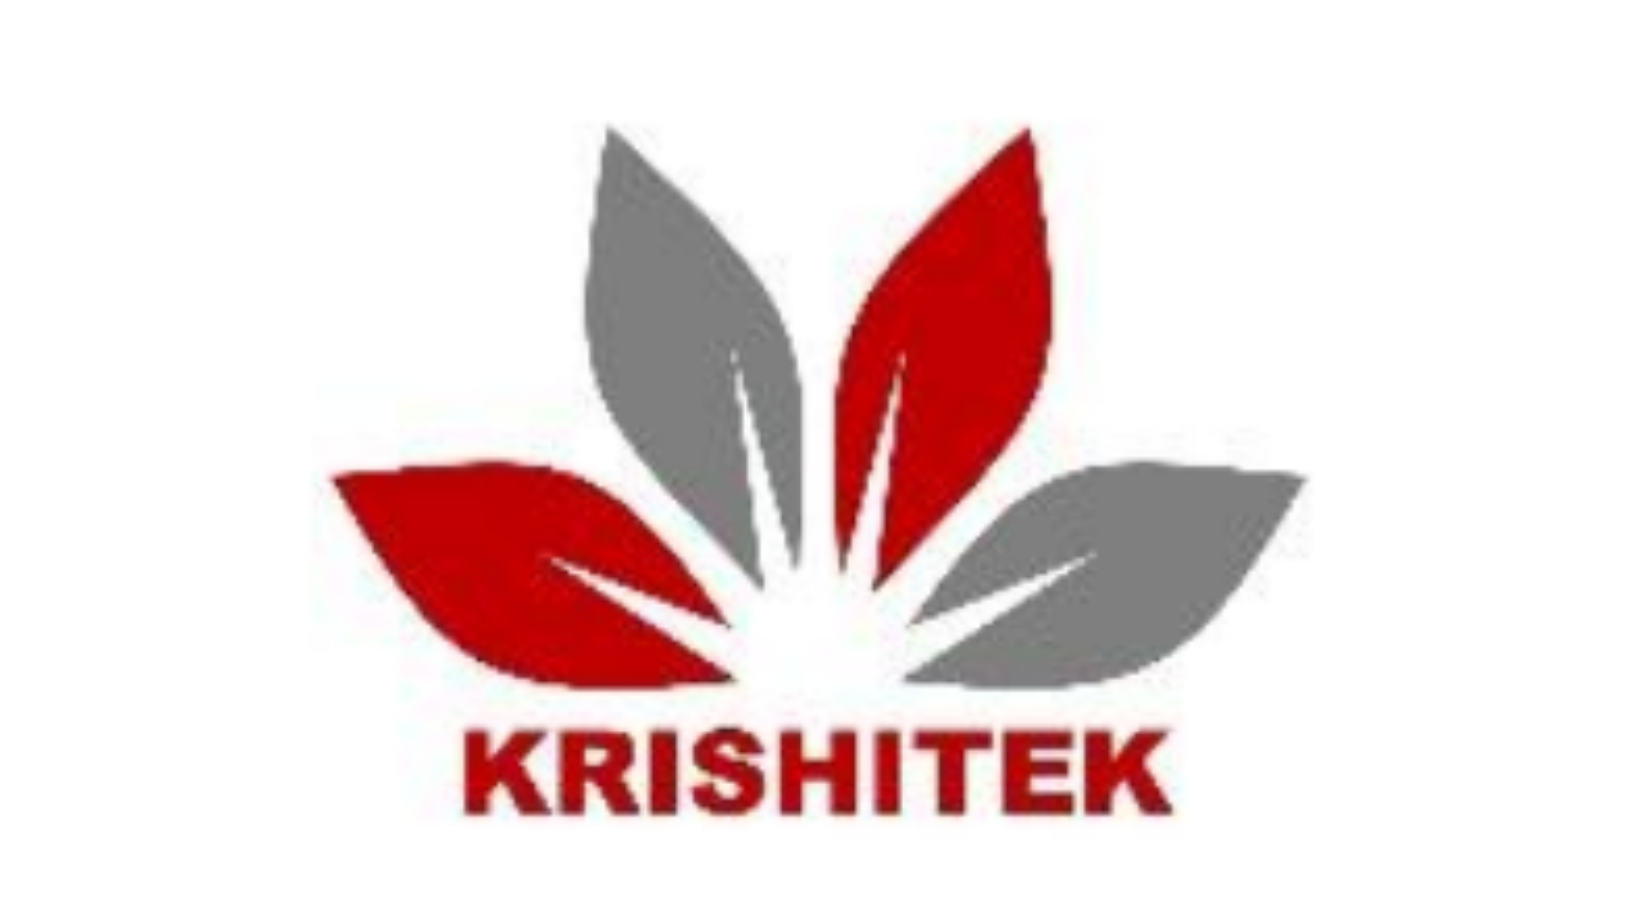 https://www.krishitek.com